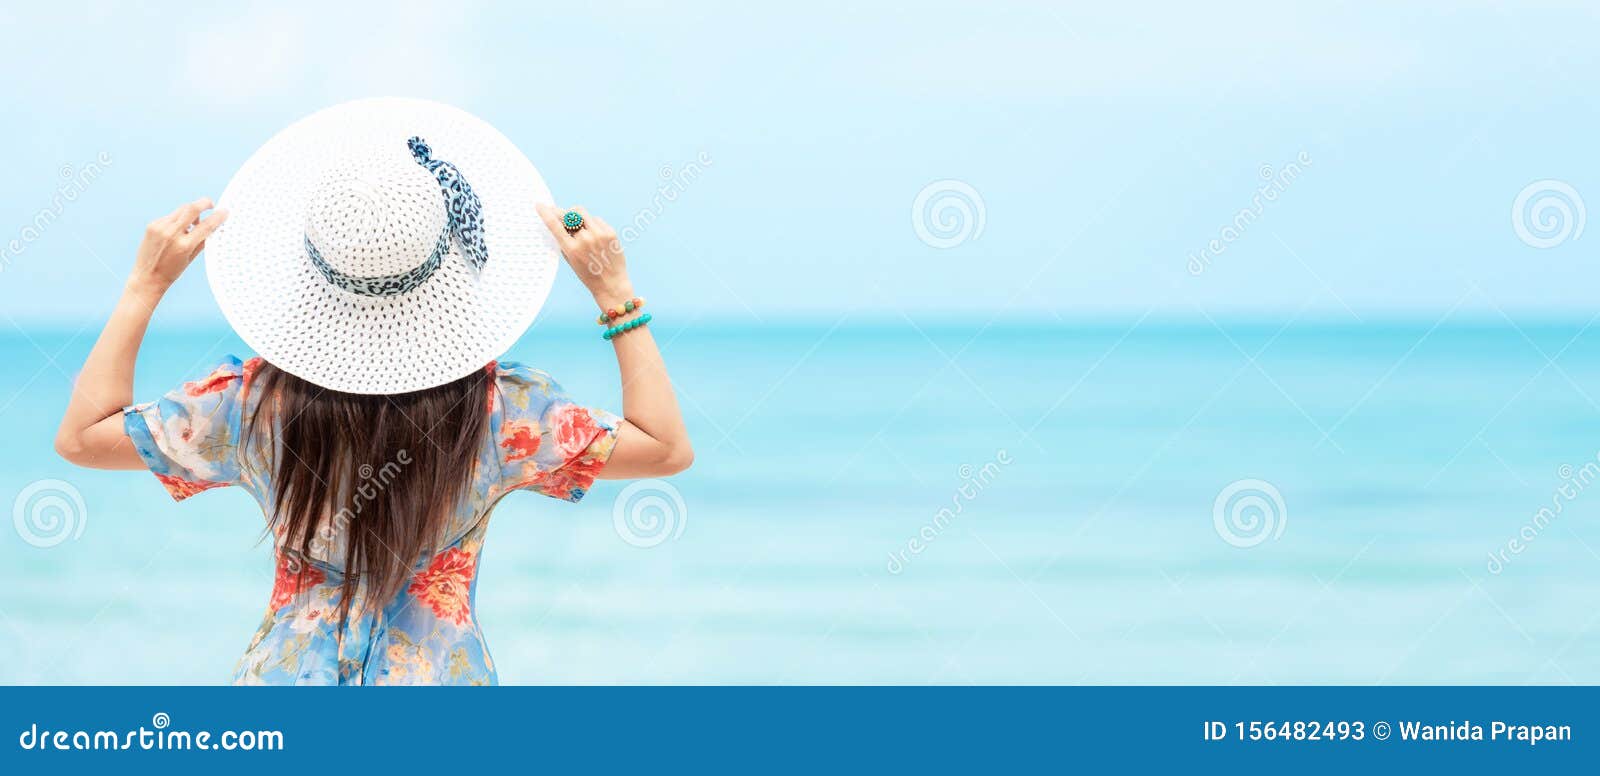 Summer Vacation. Traveler Women Relaxing and Joy Fun on the Beach